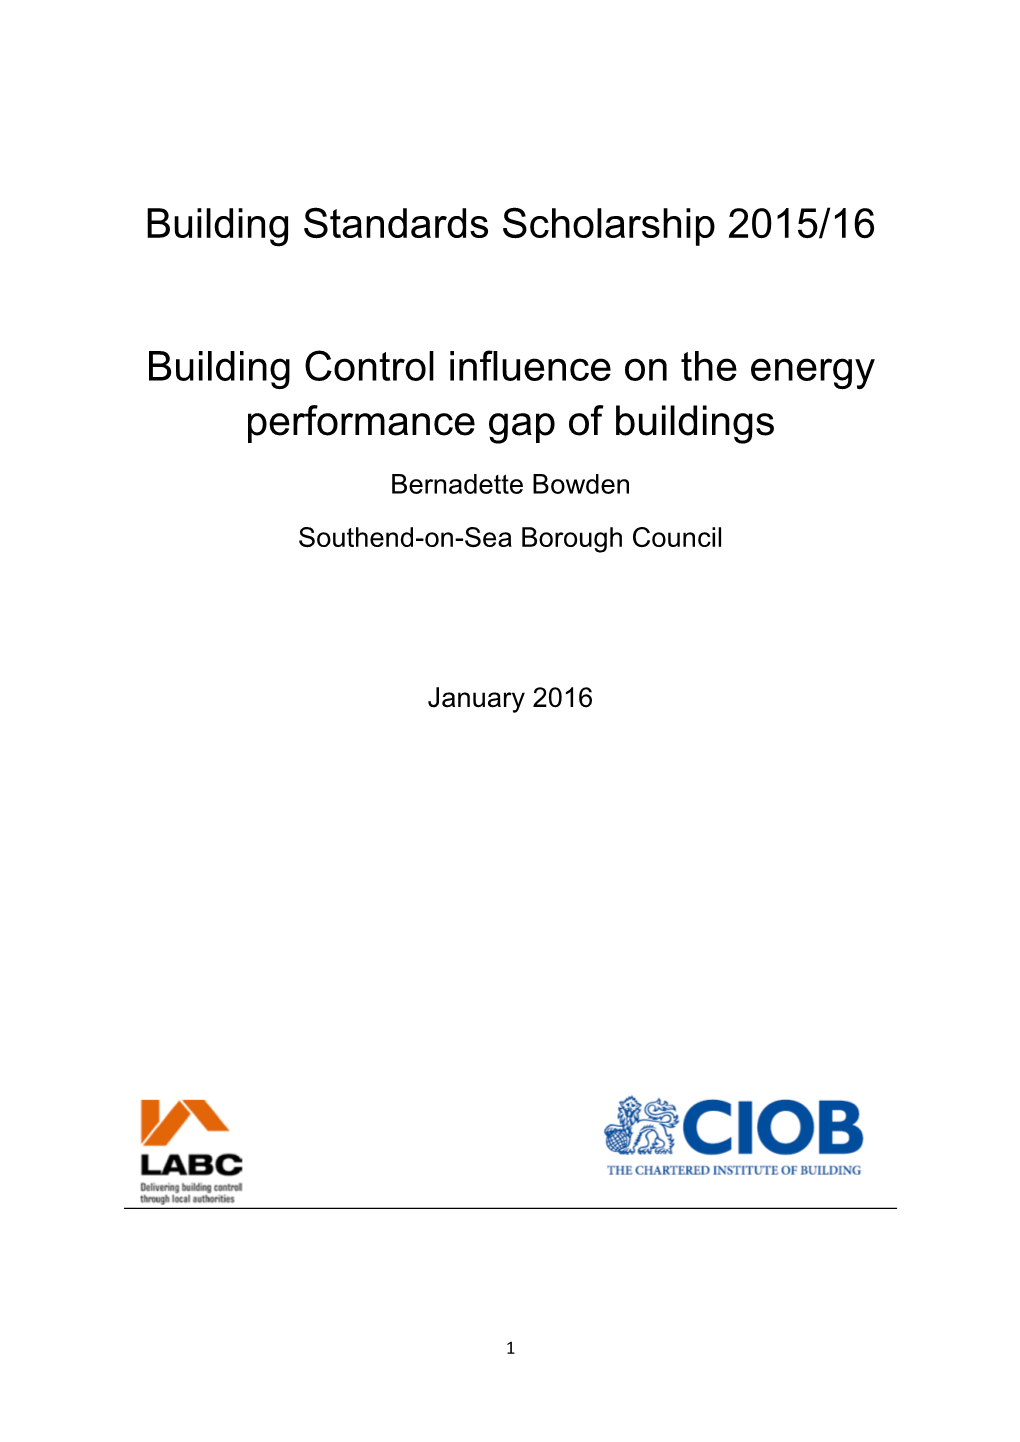 Building Standards Scholarship 2015/16 Building Control Influence